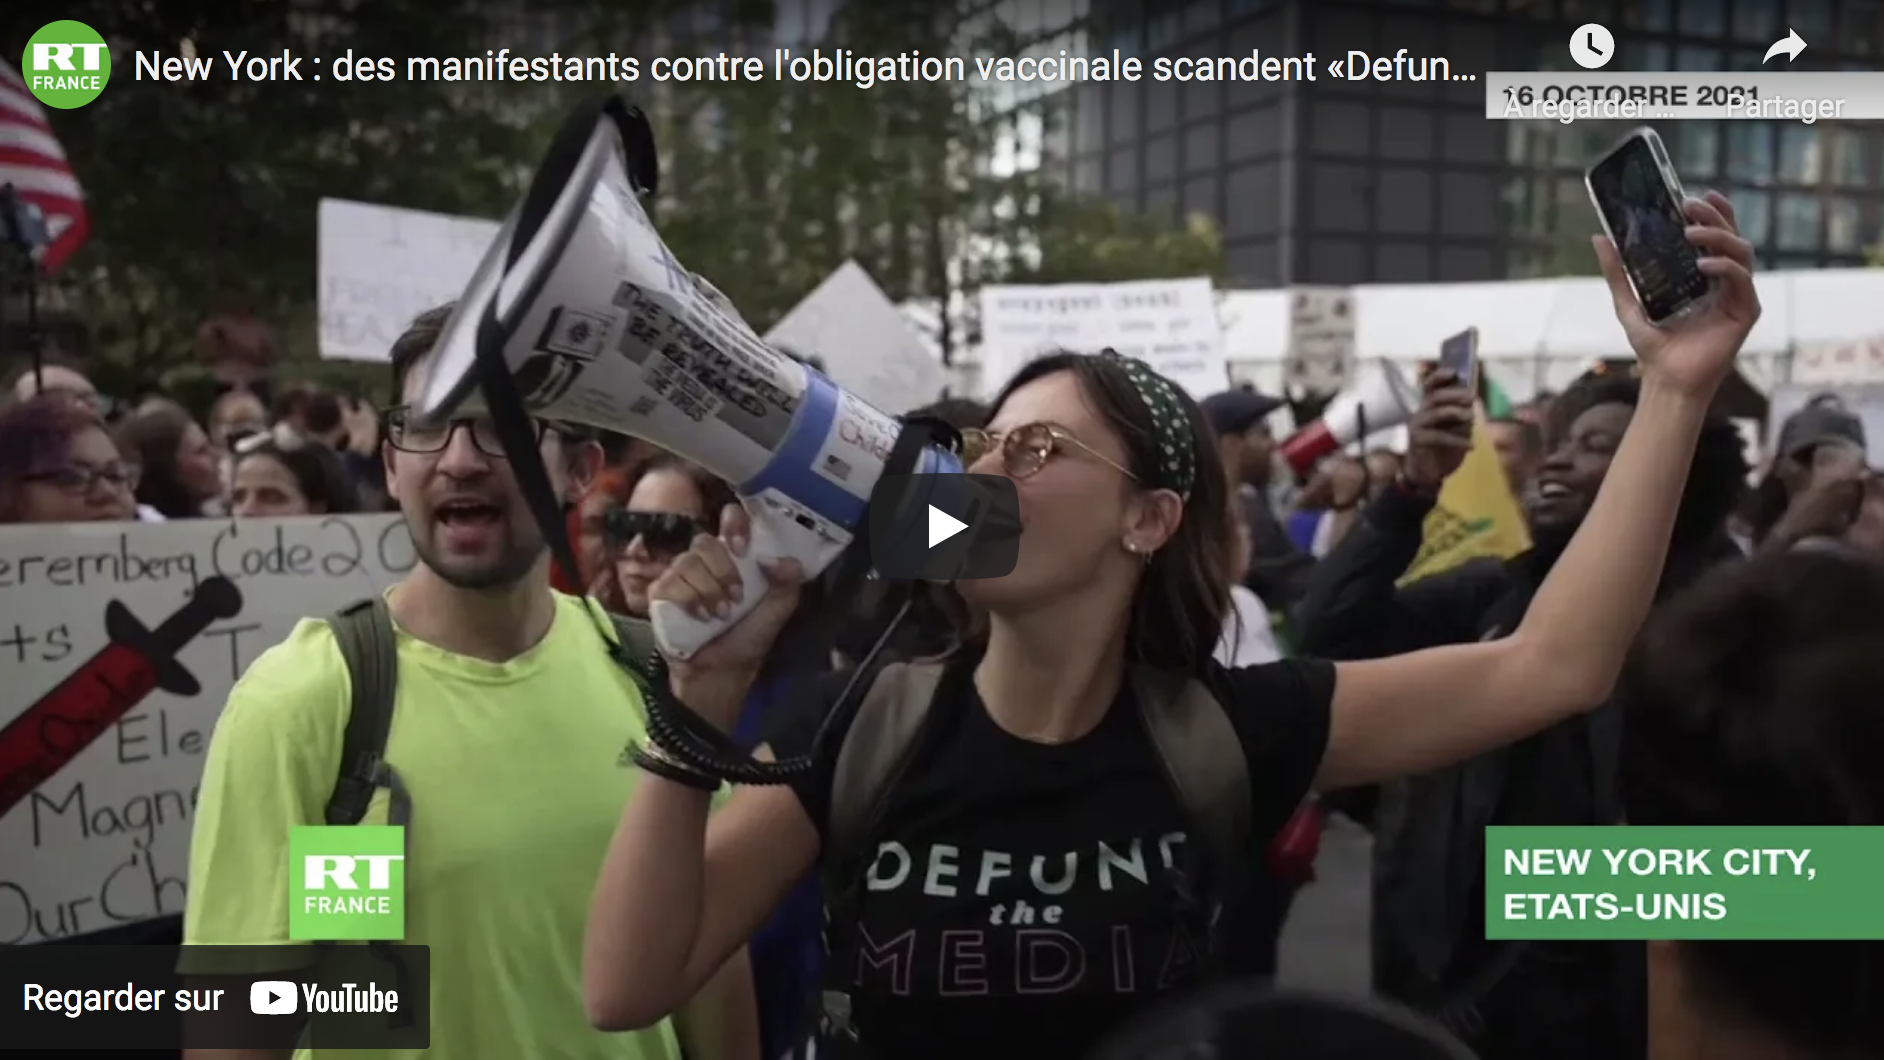 New York City : des manifestants contre l’obligation vaccinale scandent « Defund the media » (VIDÉO)